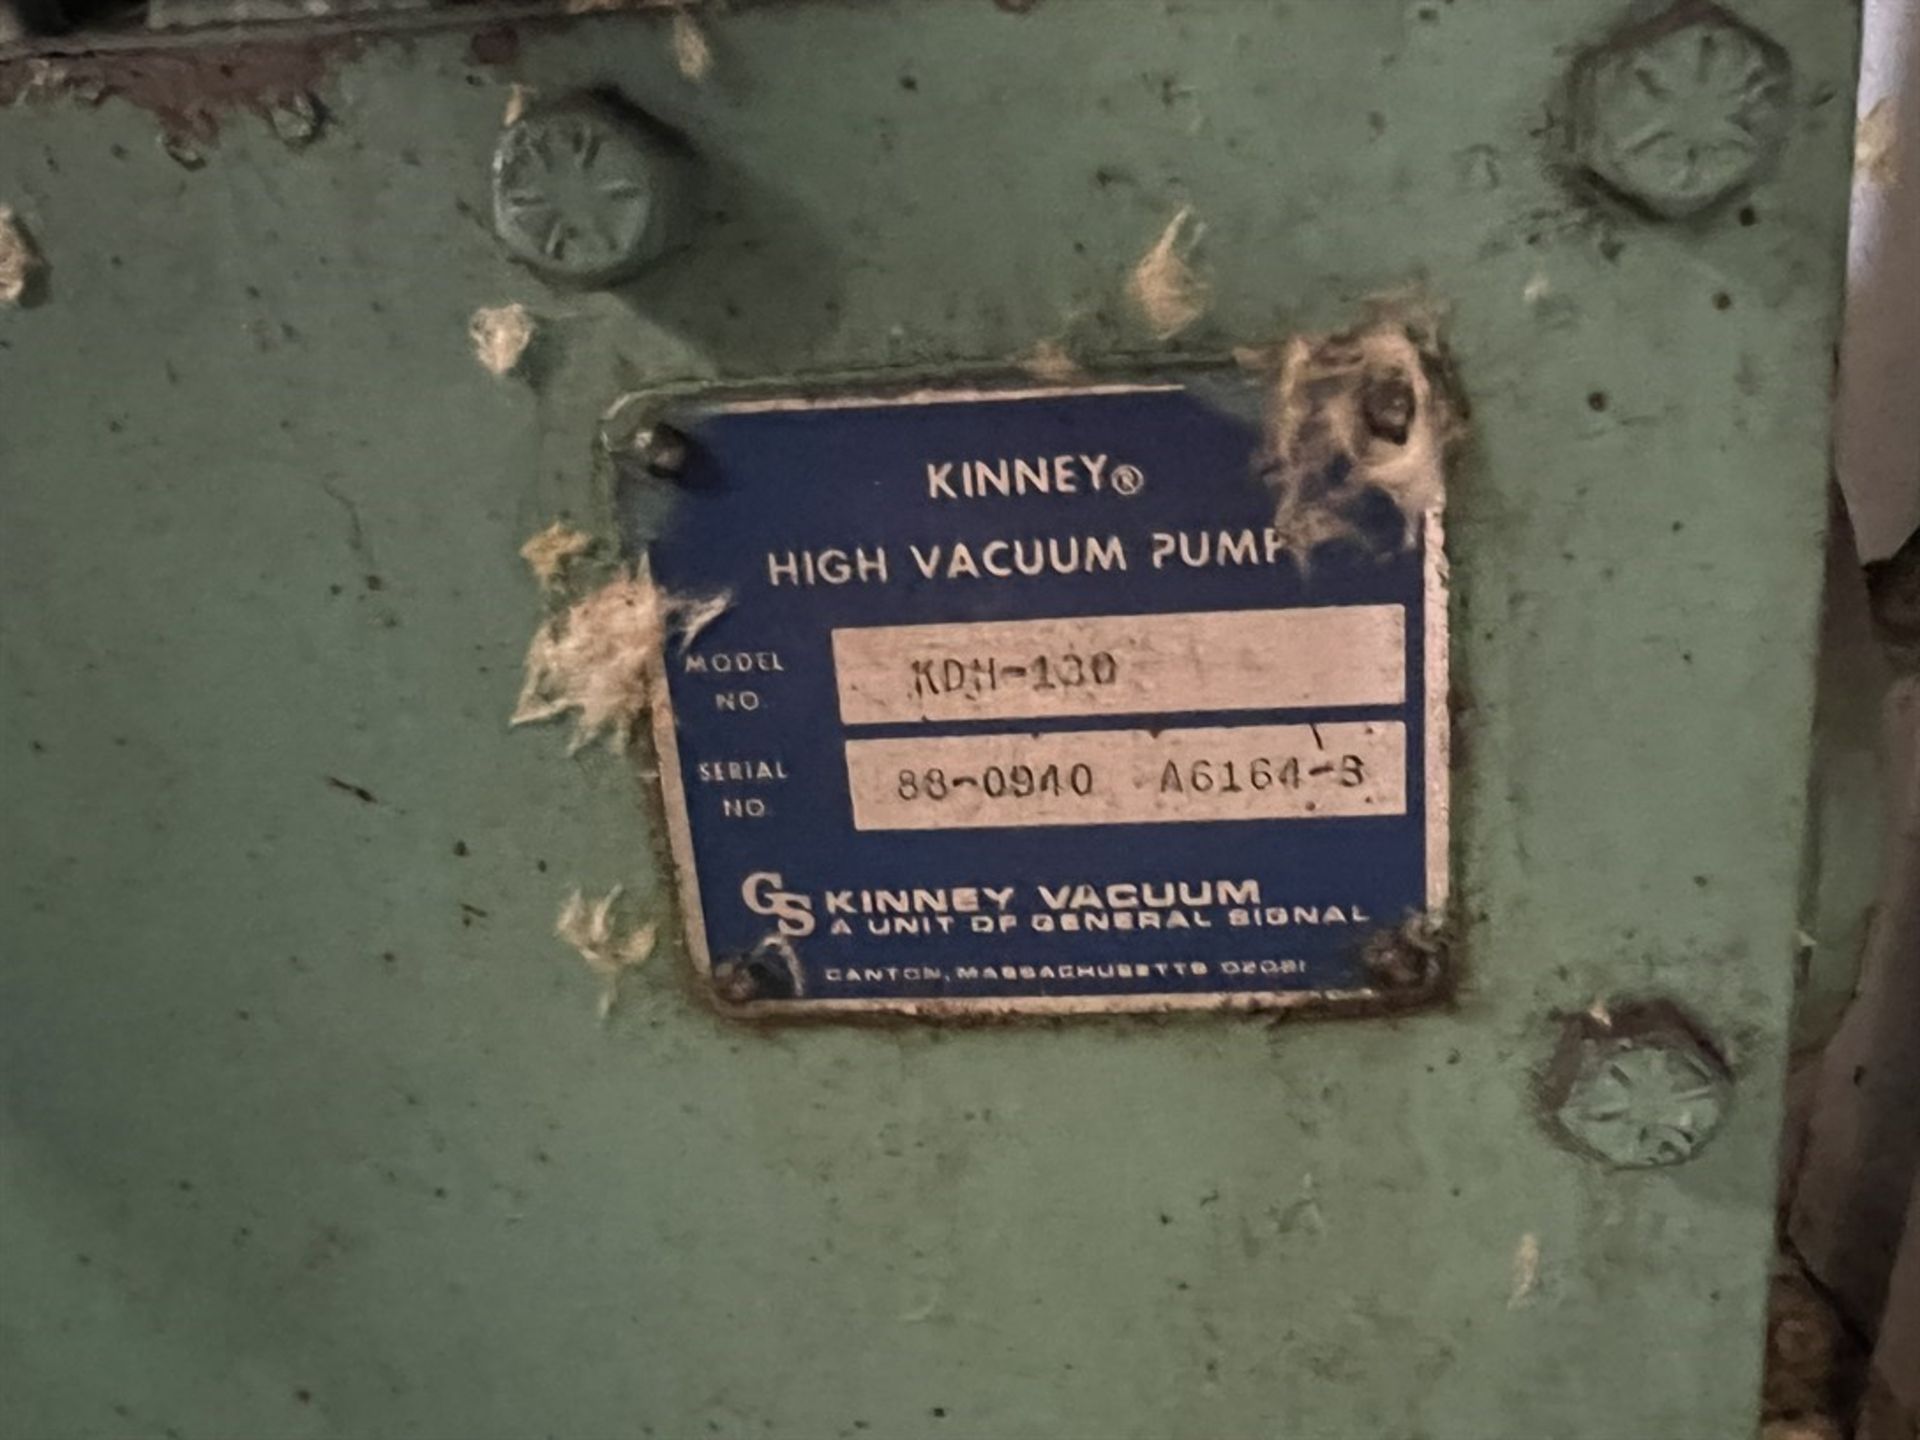 KINNEY KDH-130 High Vacuum Pump, s/n 88-0940, 5 HP (Machine Shop) - Image 5 of 6